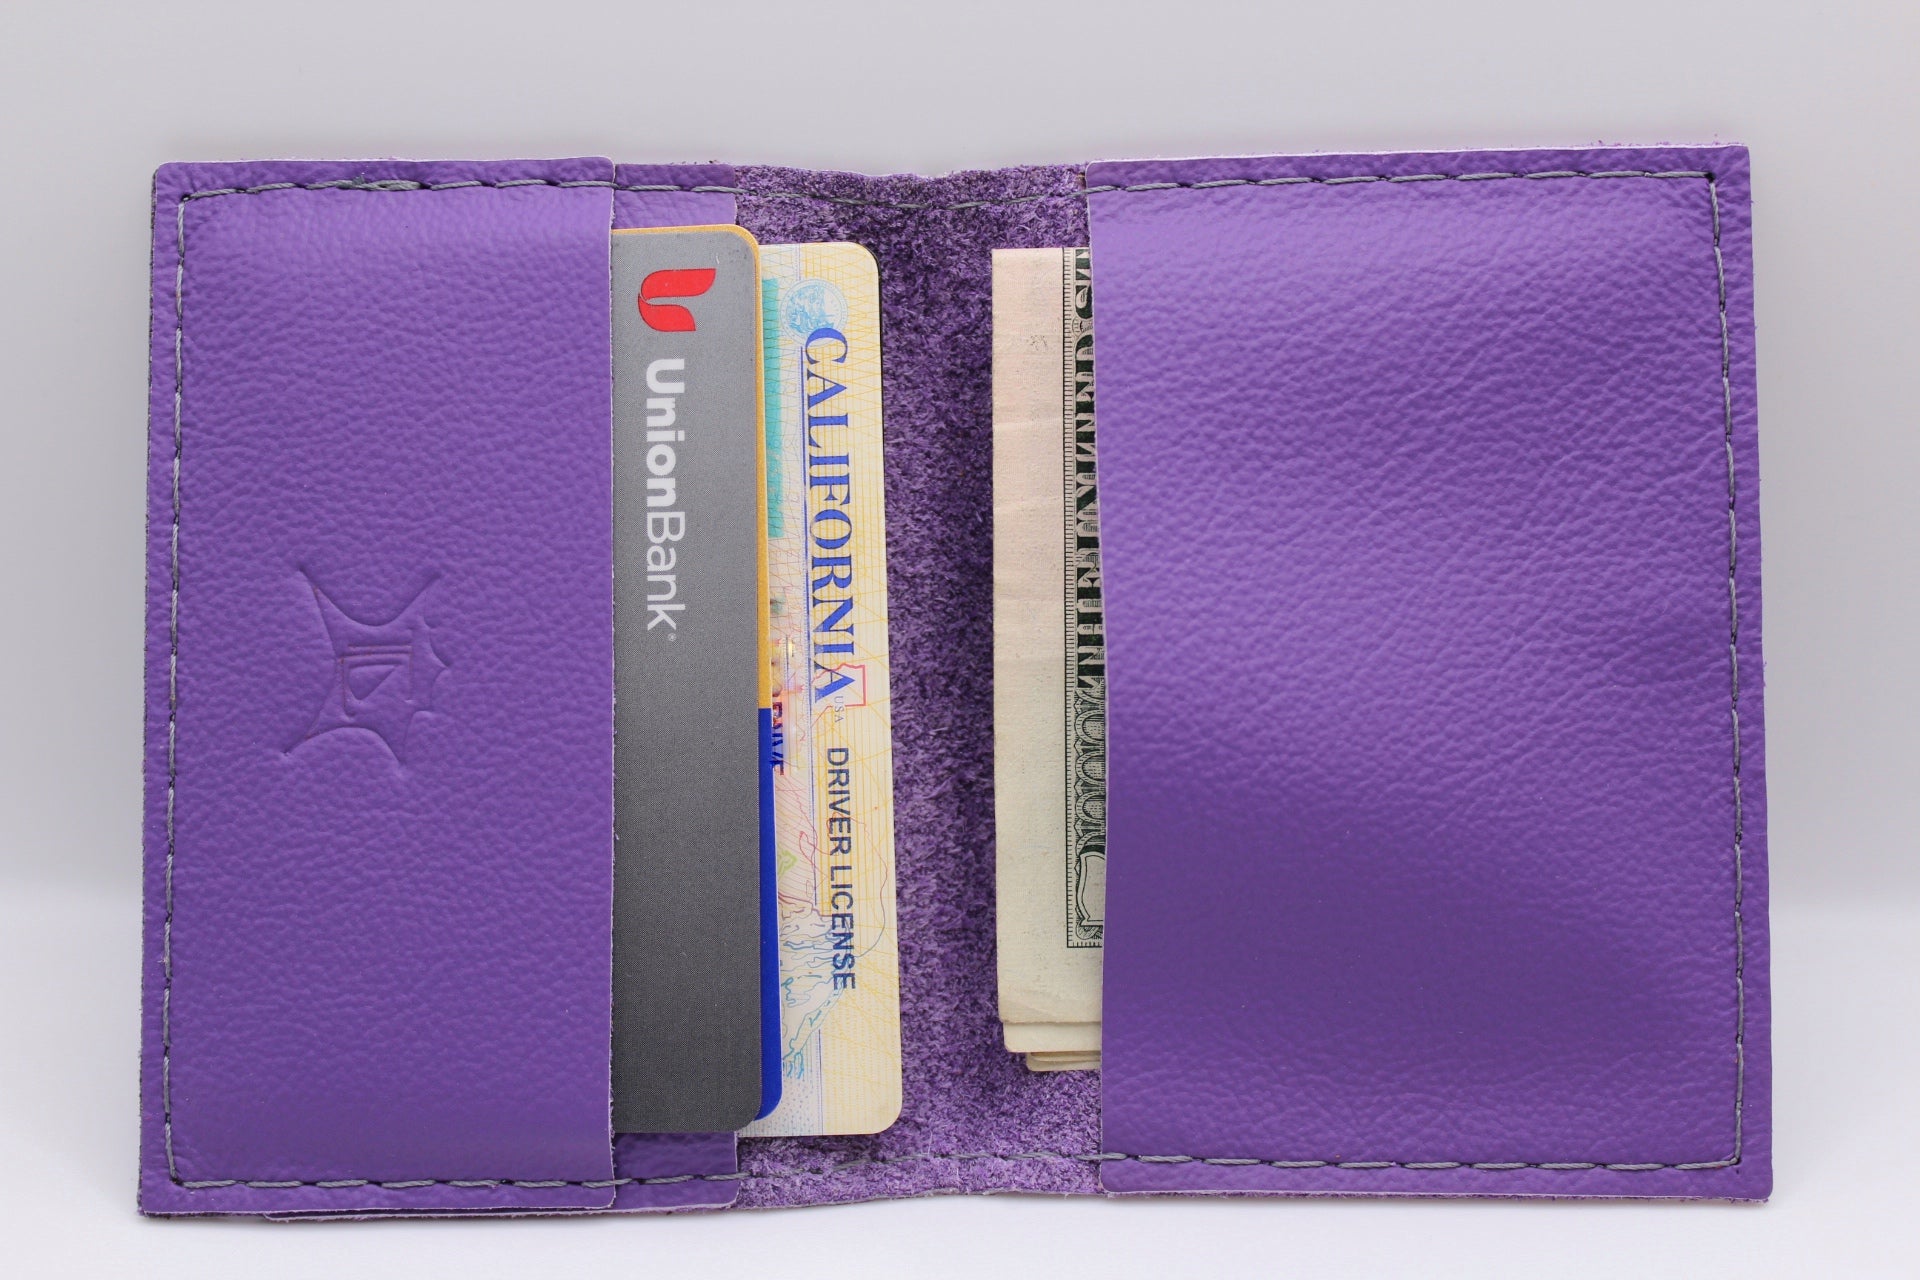 Lilac Cash Wallet